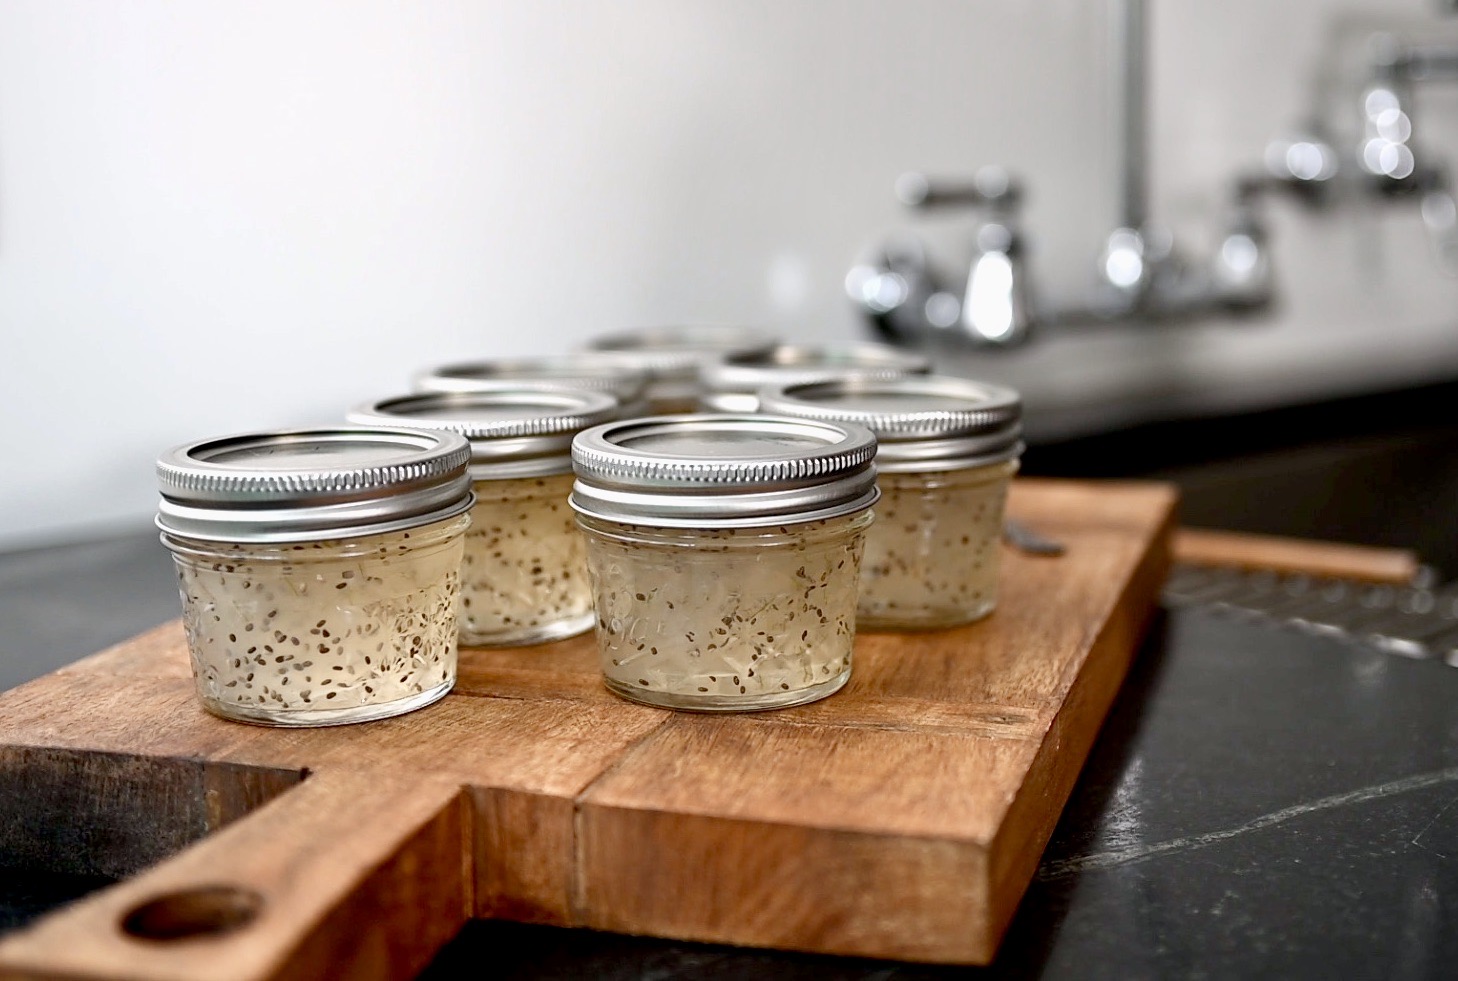 aloe vera jelly in small glass jars